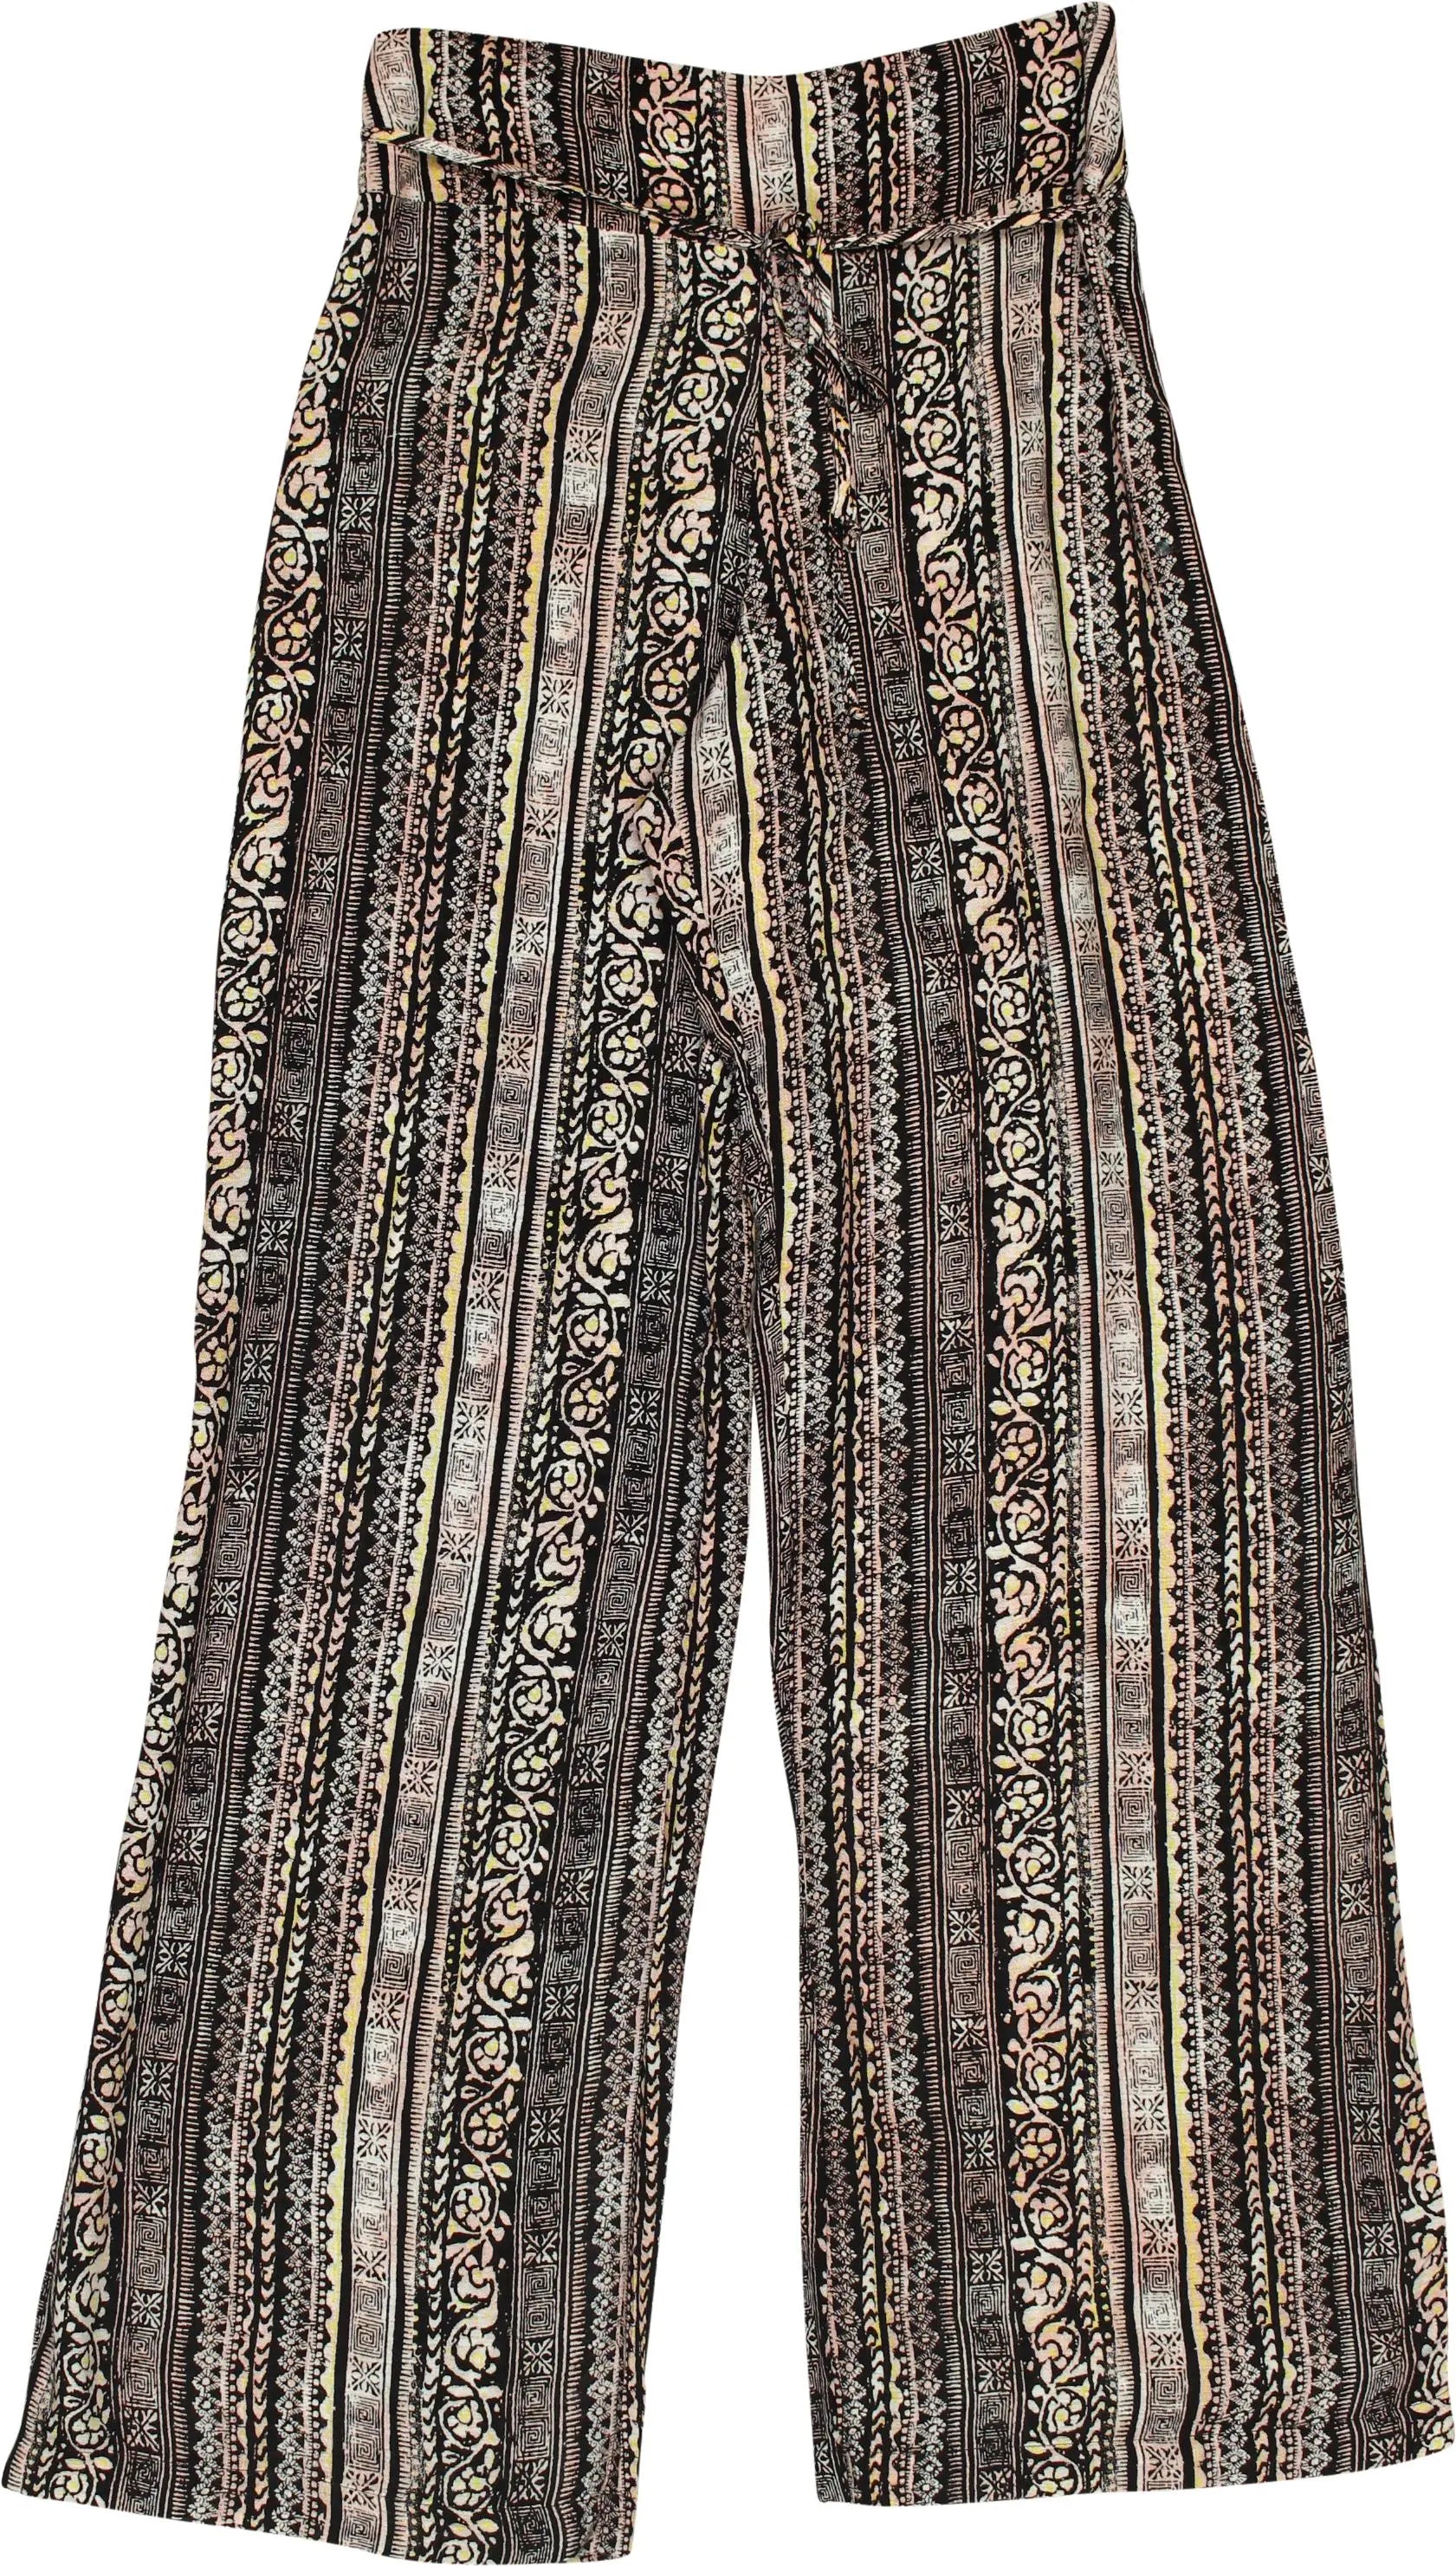 Self Esteem - Beach Pants- ThriftTale.com - Vintage and second handclothing